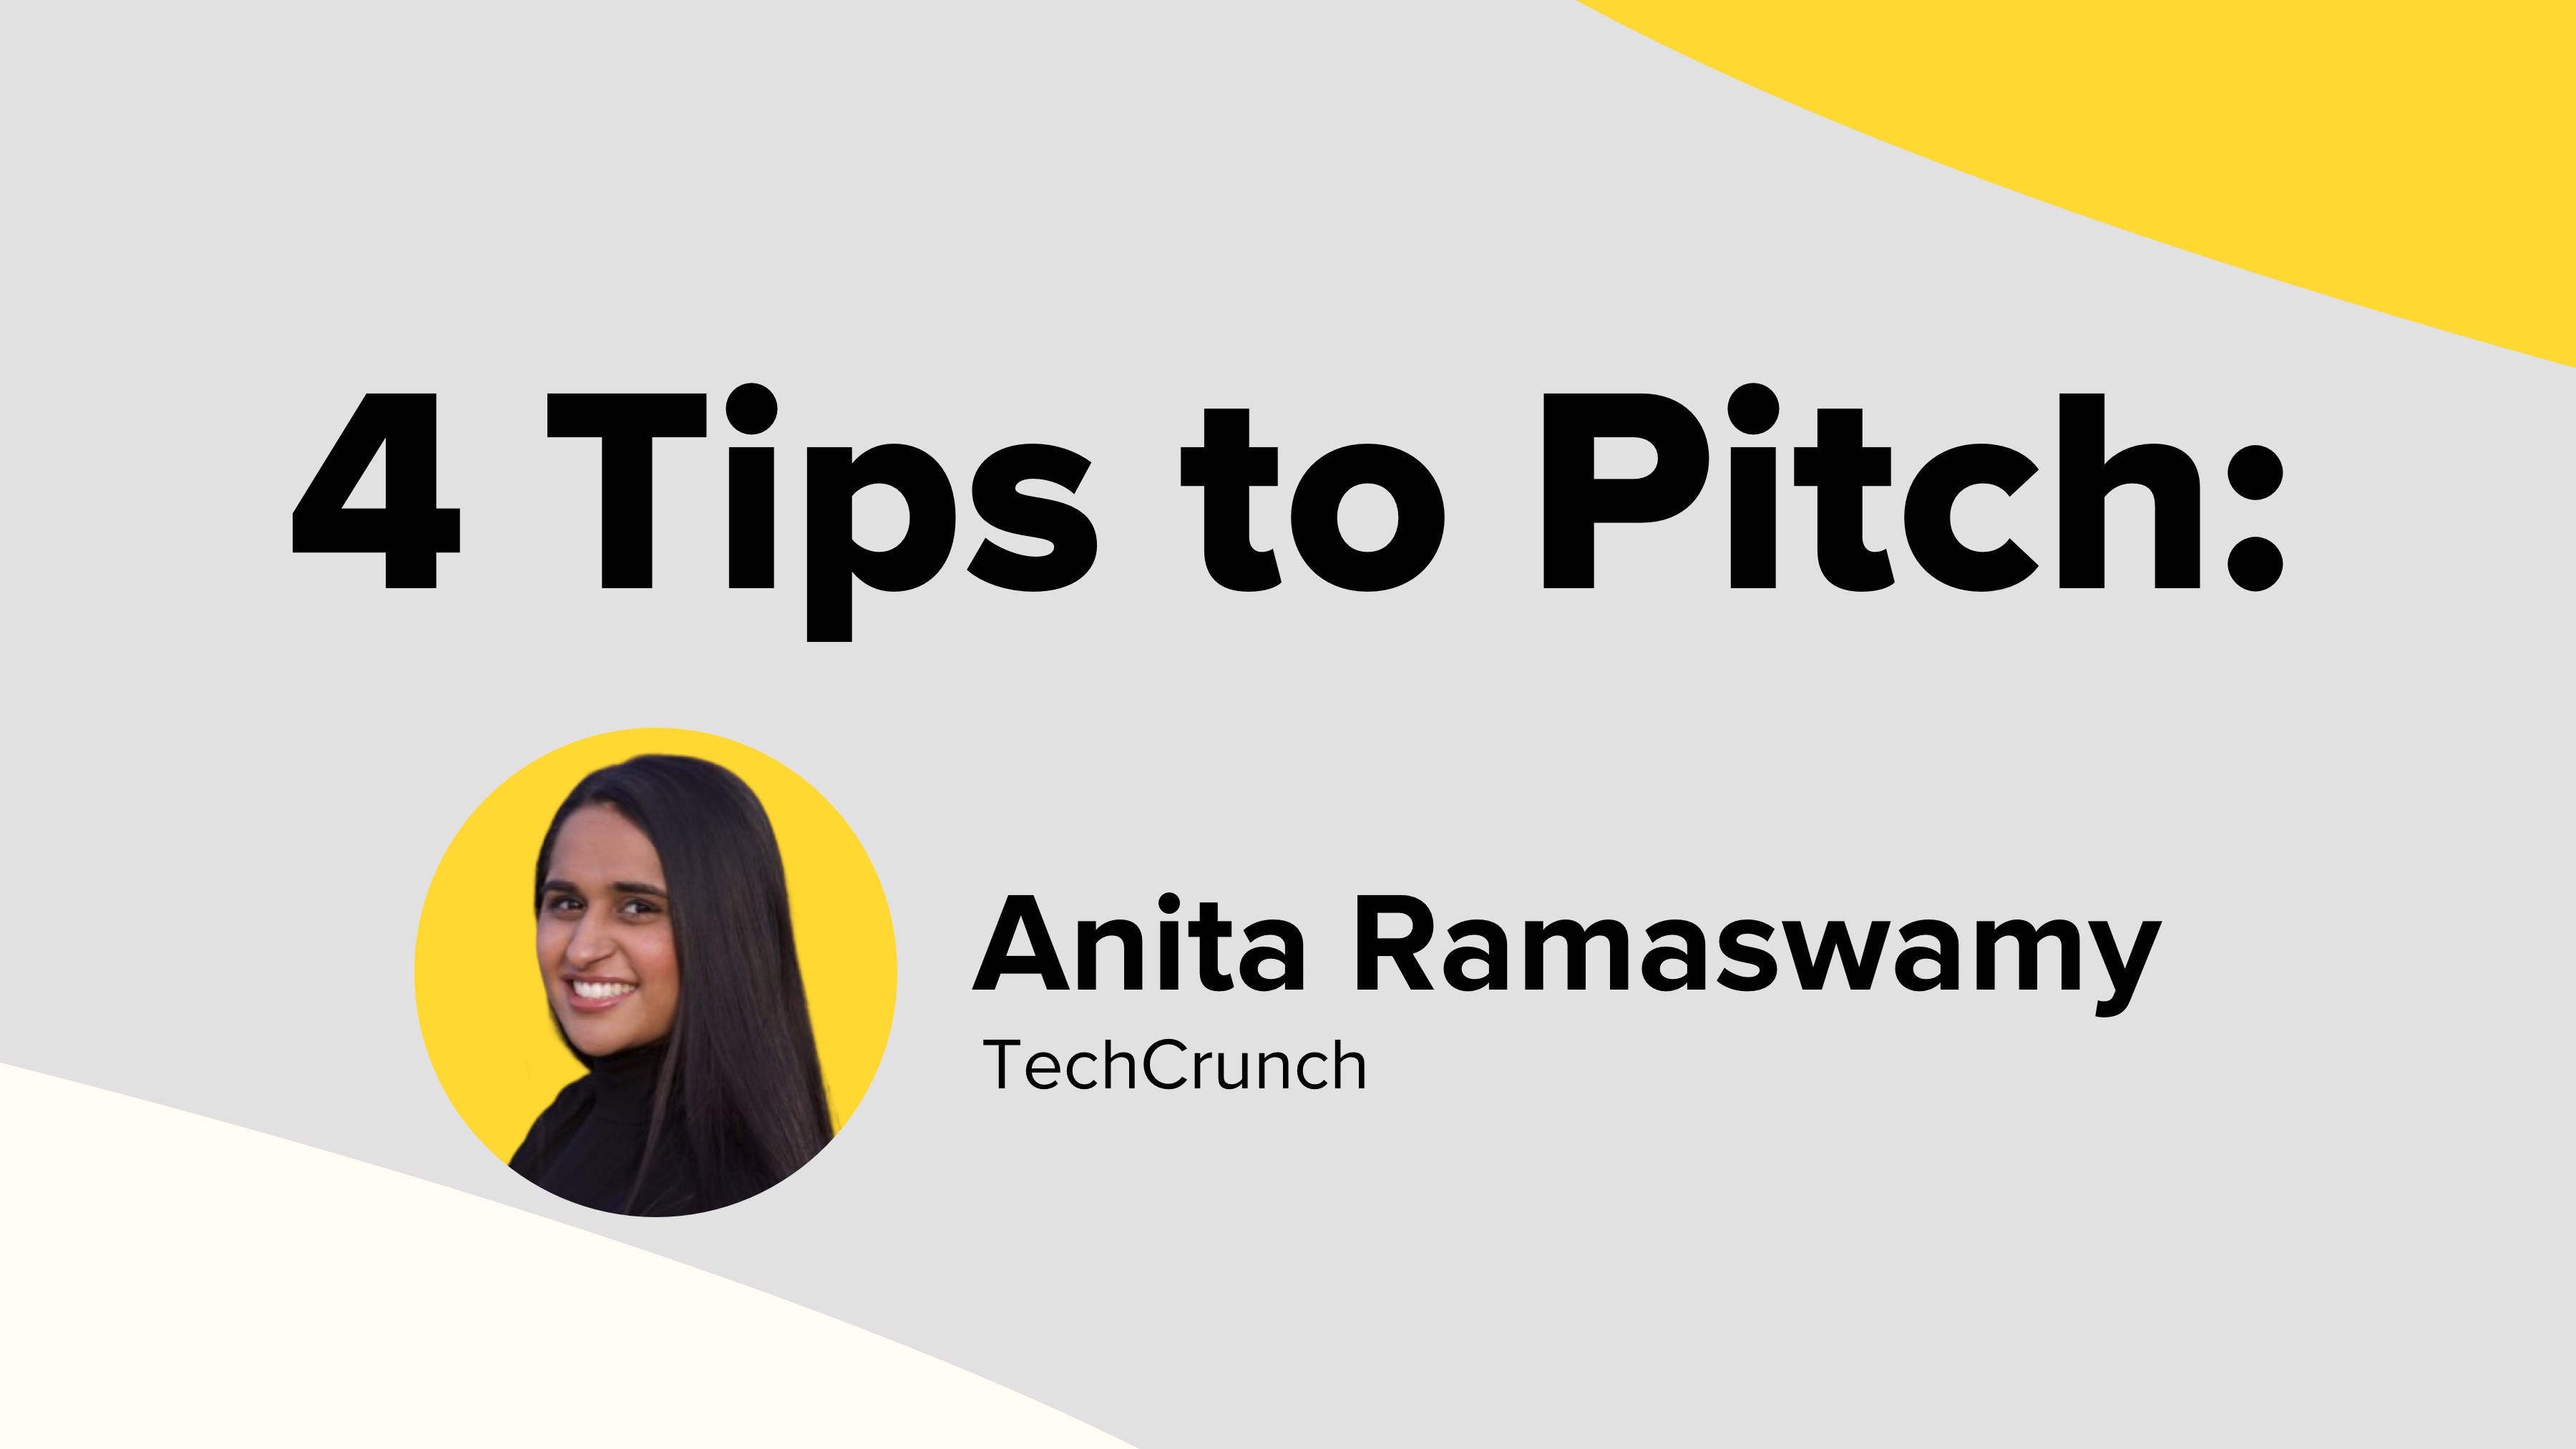 4 Tips to Pitch Anita Ramaswamy of TechCrunch